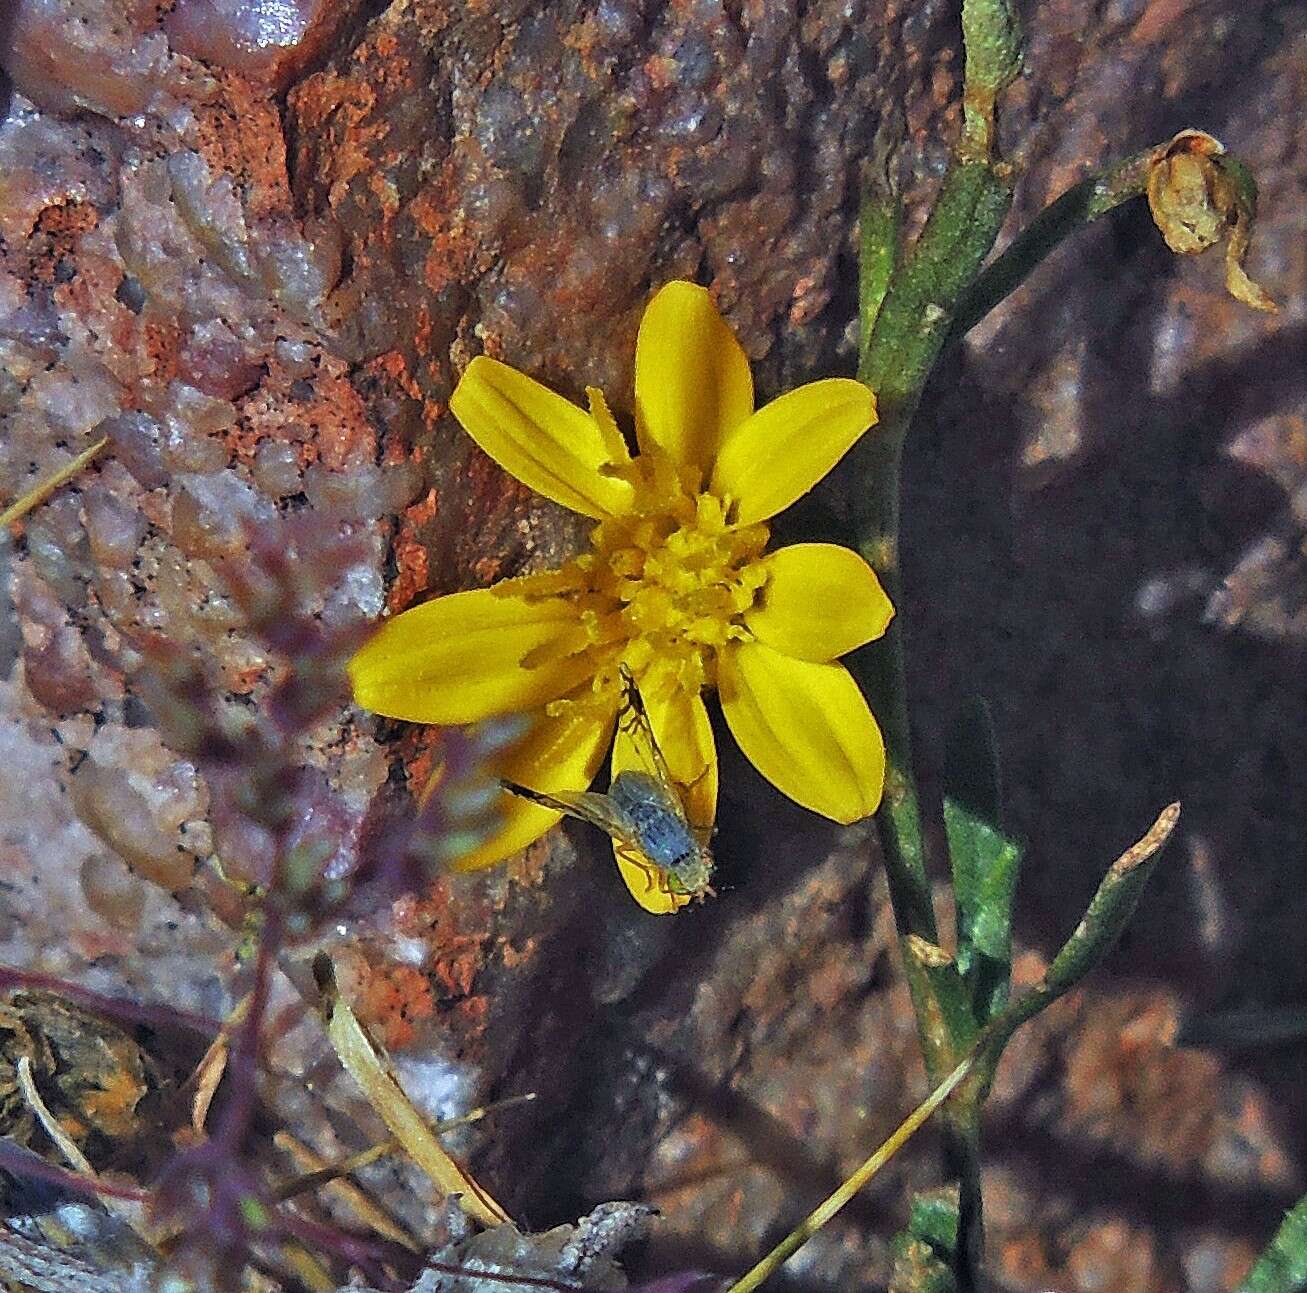 Image of Gutierrezia mandonii (Sch. Bip.) Solbrig